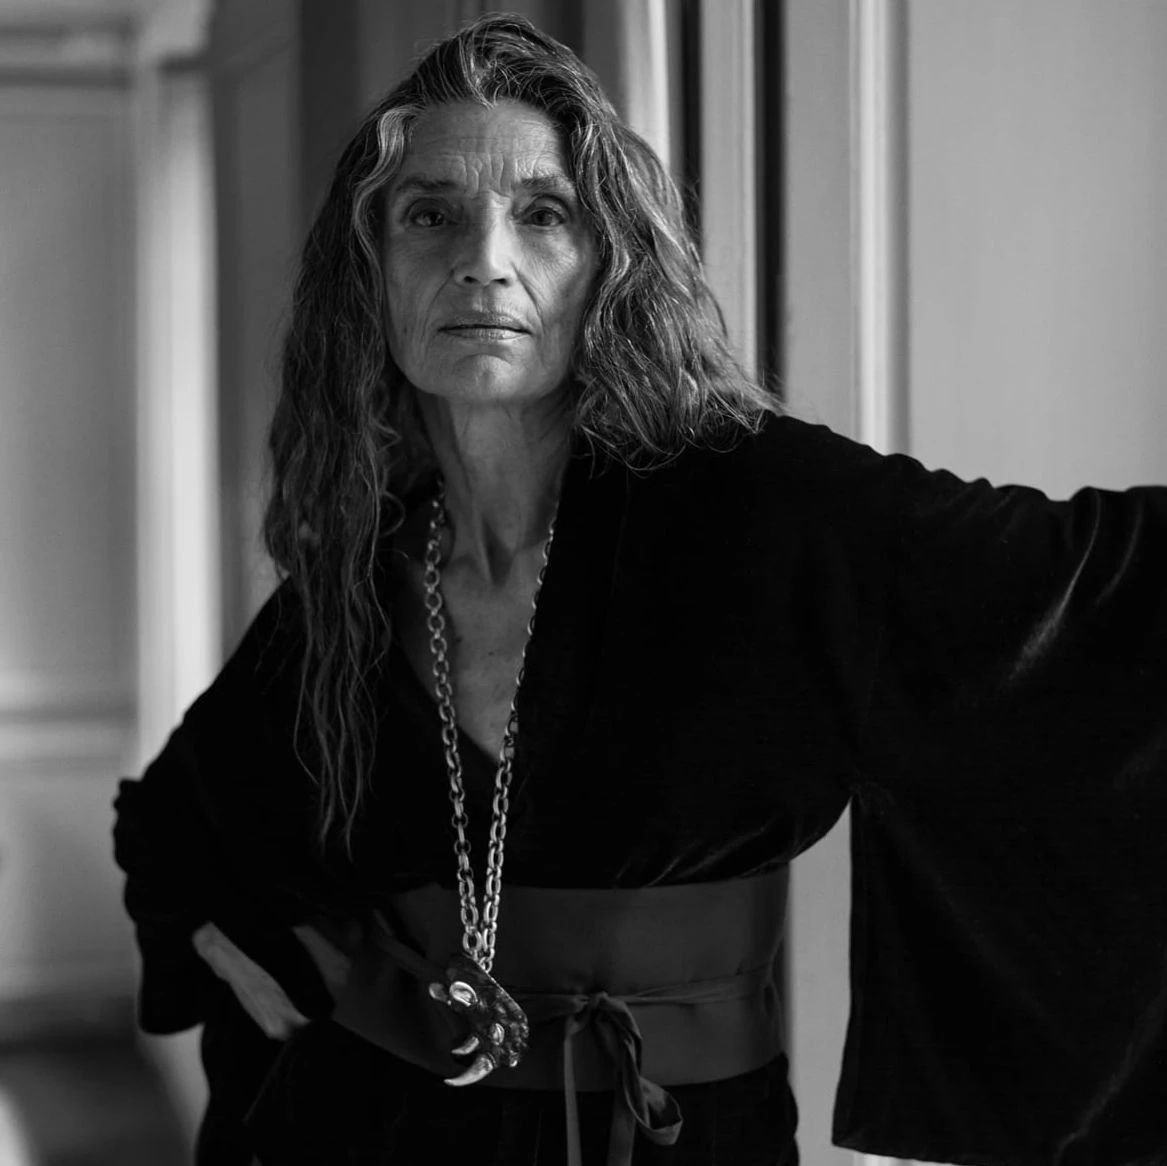 67-річна акторка Анхела Моліна стала обличчям нової колекції Zara (фото) фото 3